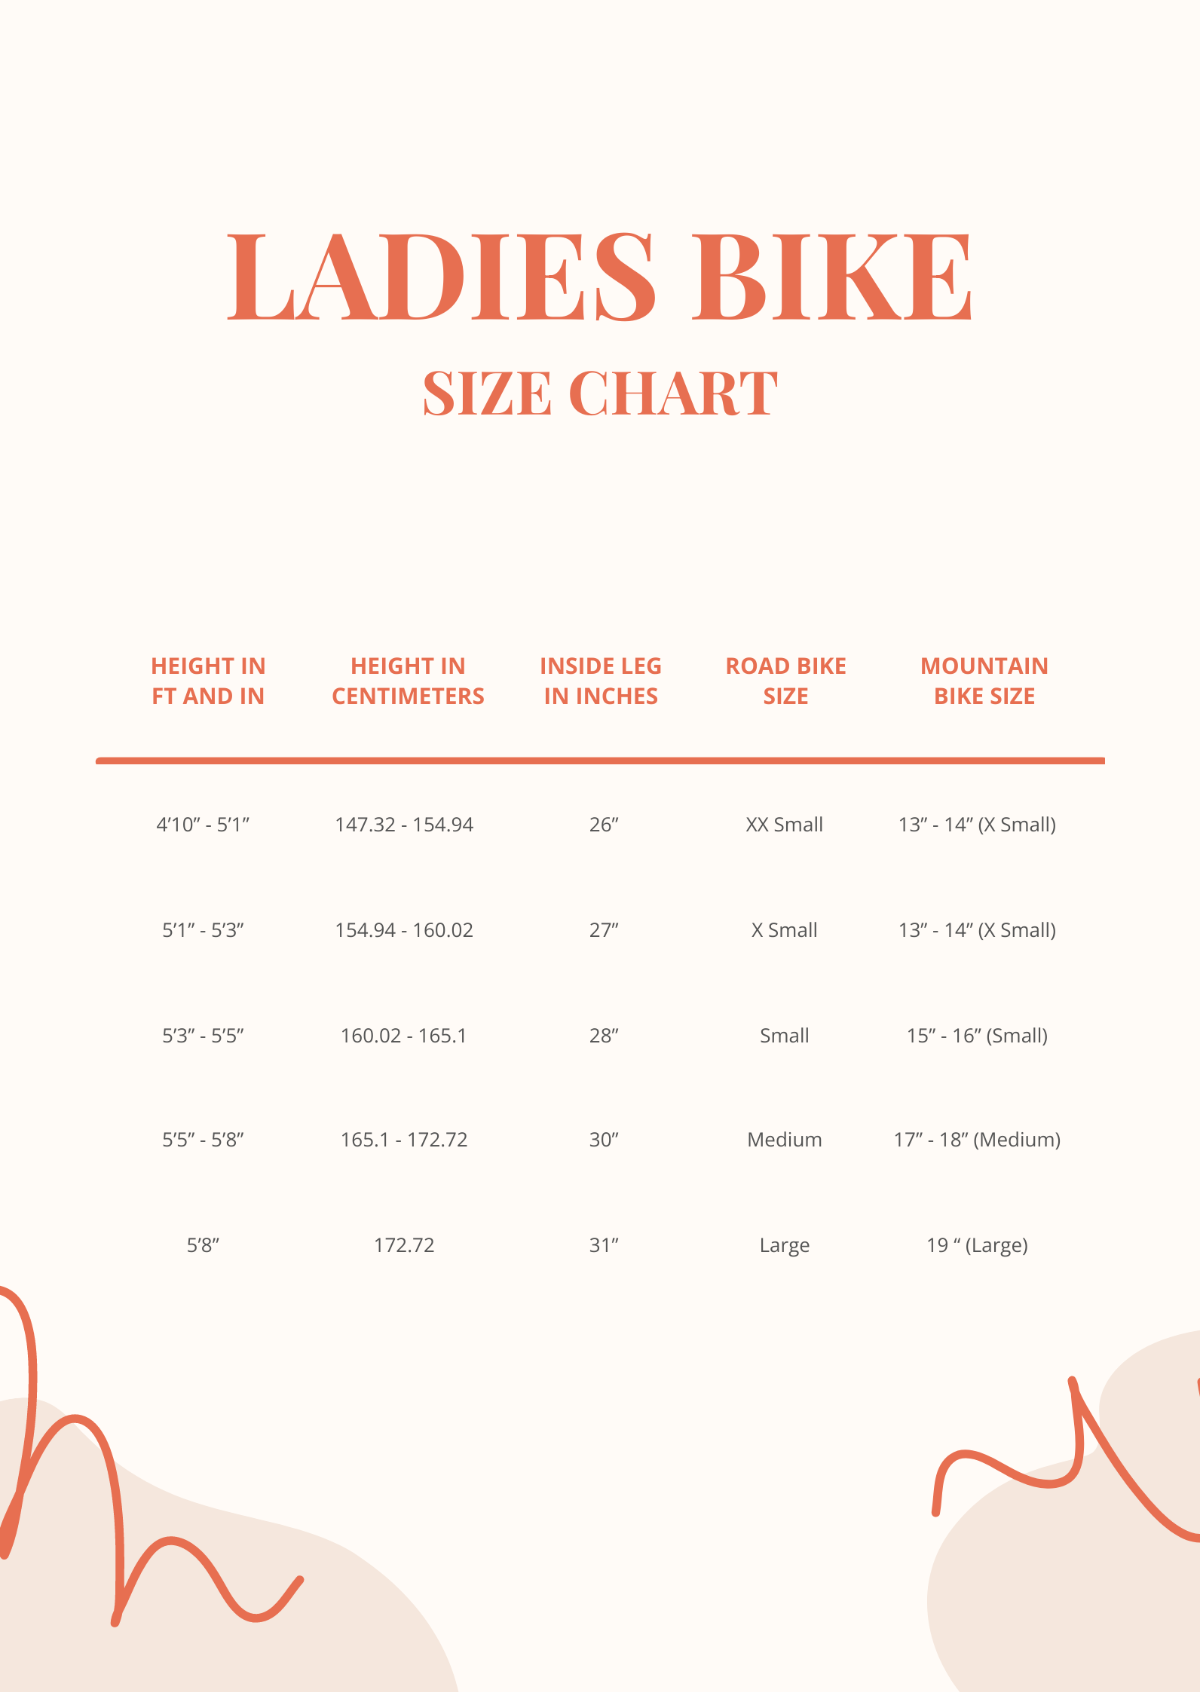 Ladies Bike Size Chart Template